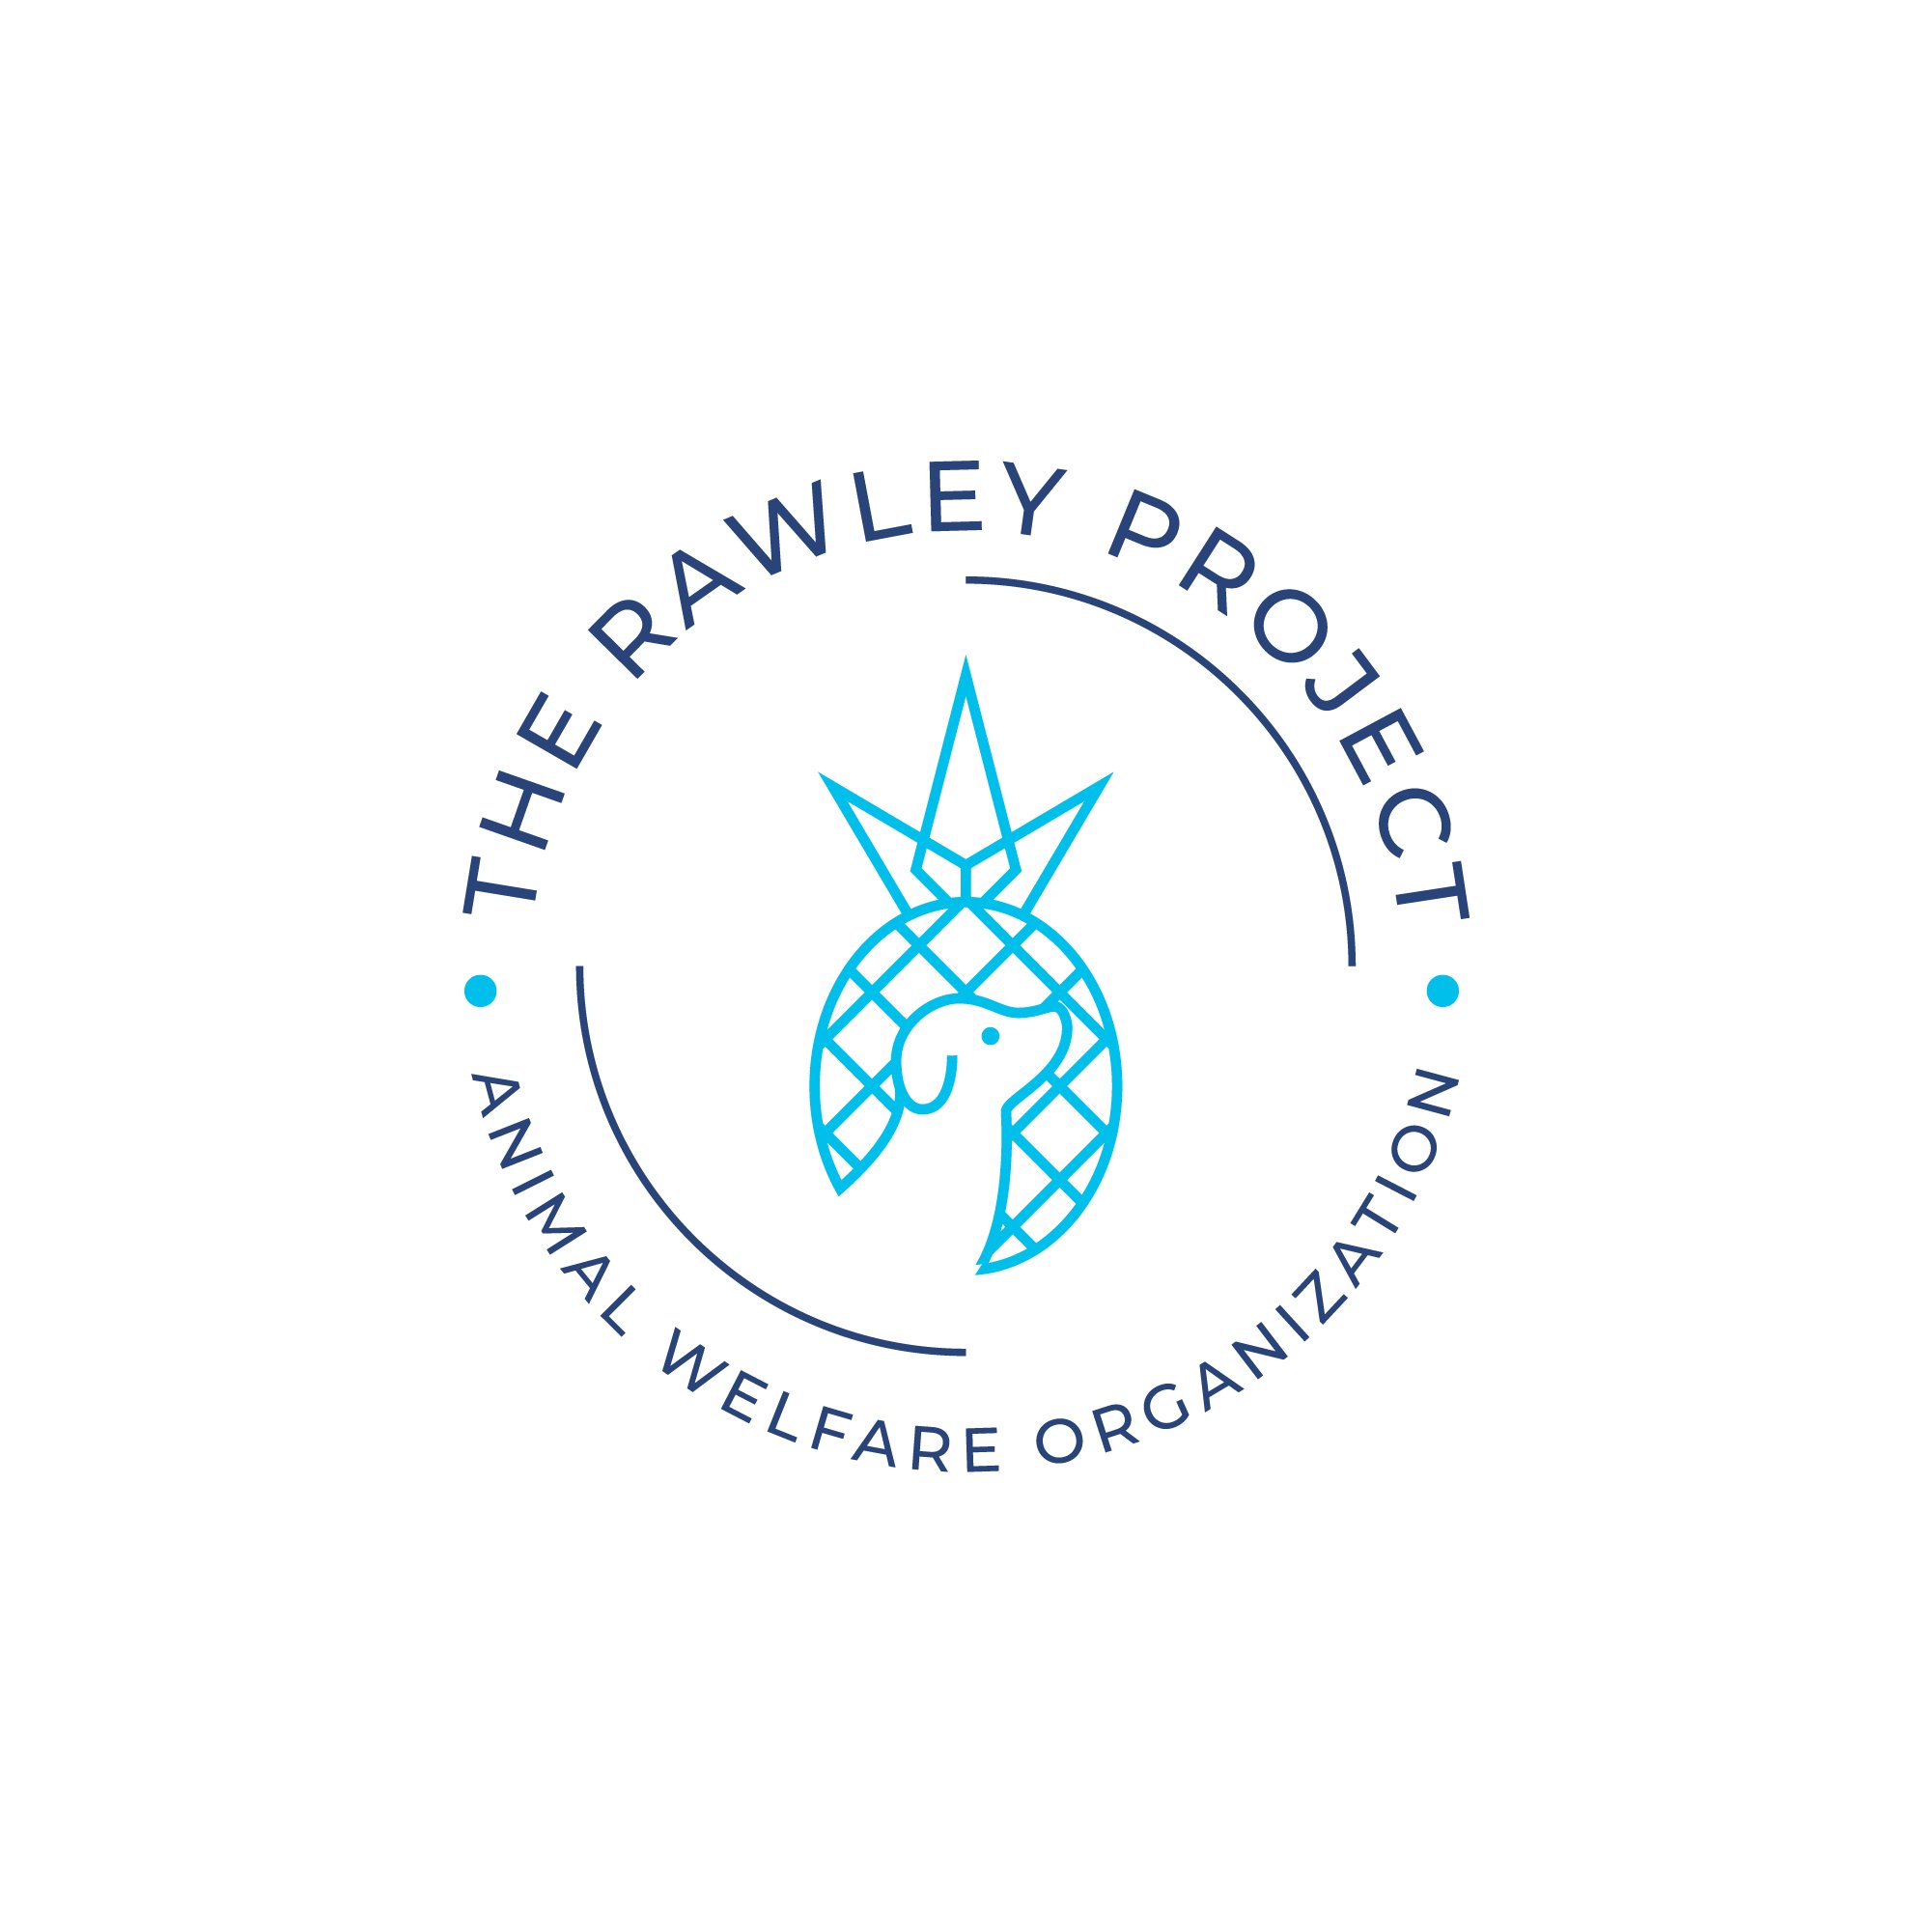 The Rawley Project logo A4.jpg